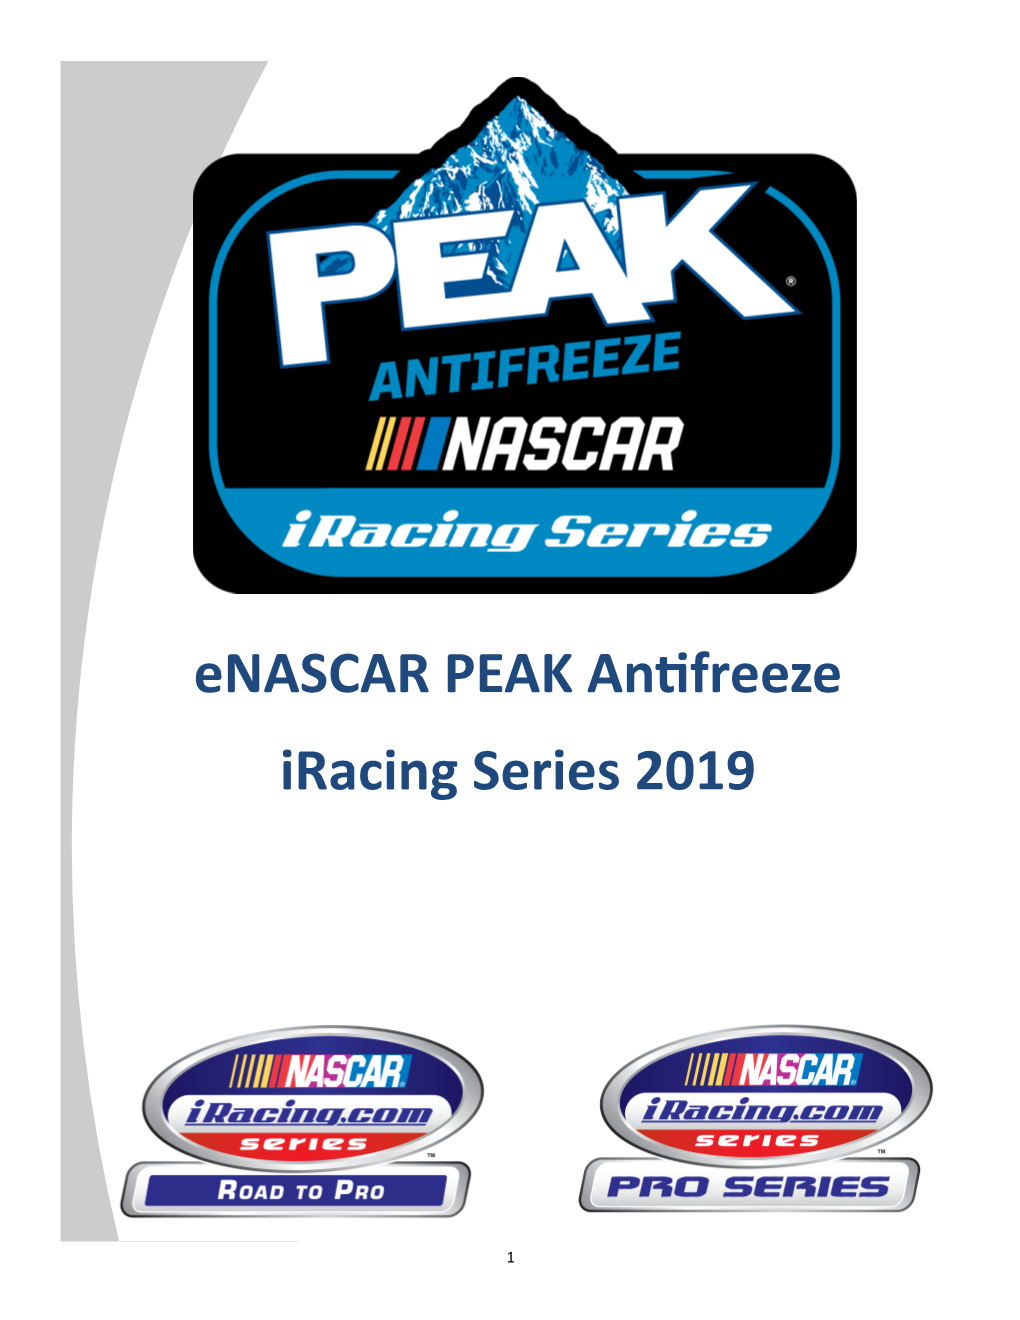 Enascar PEAK Antifreeze Iracing Series 2019